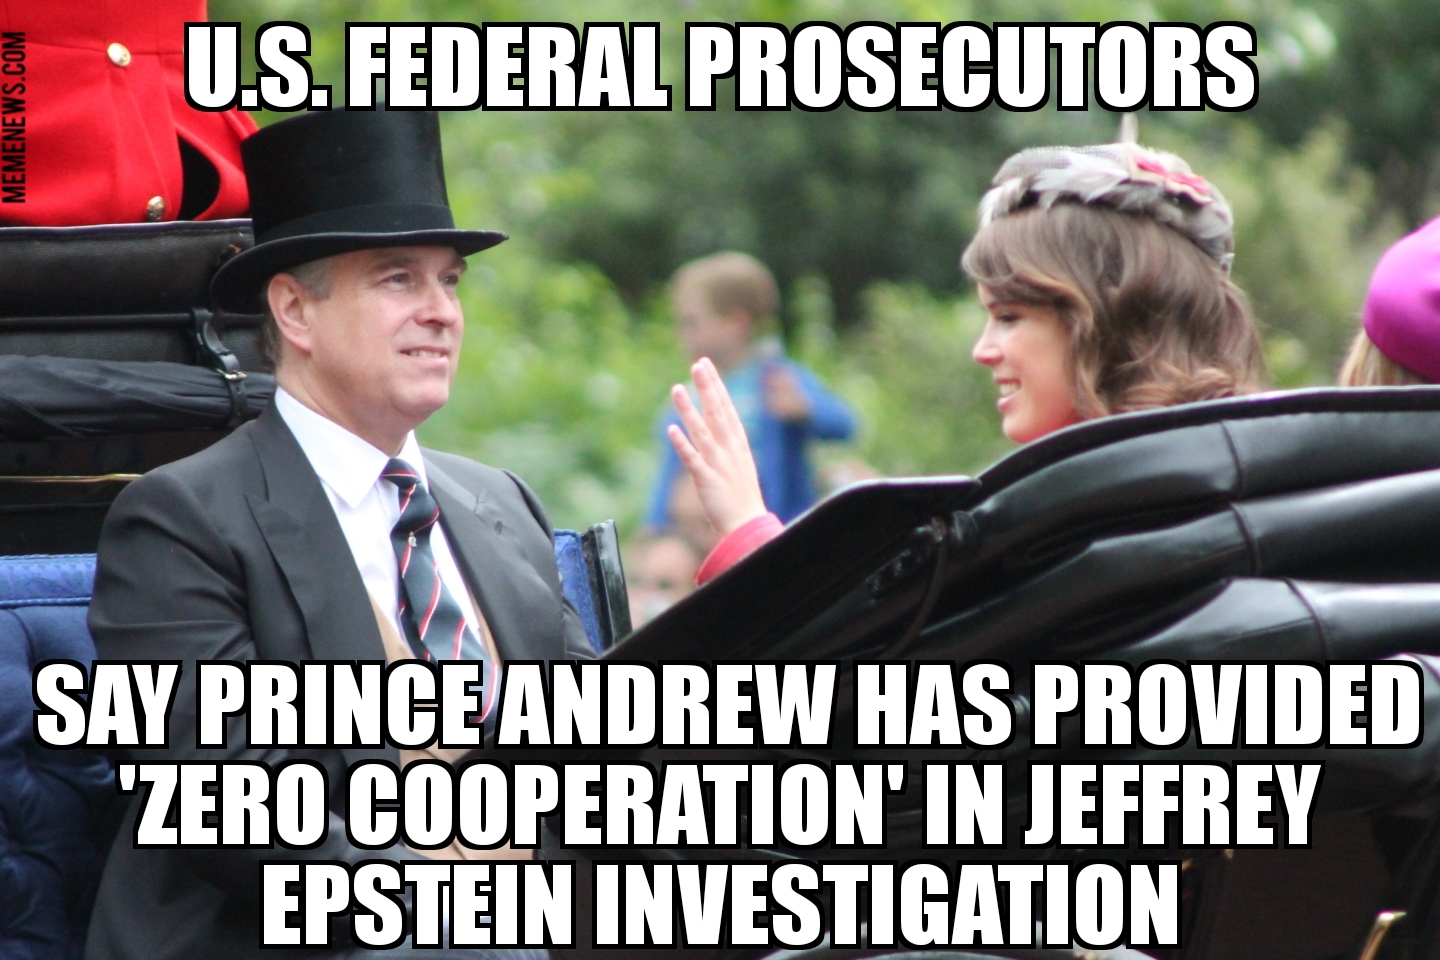 Prince Andrew provides ‘zero cooperation’ in Jeffrey Epstein investigation